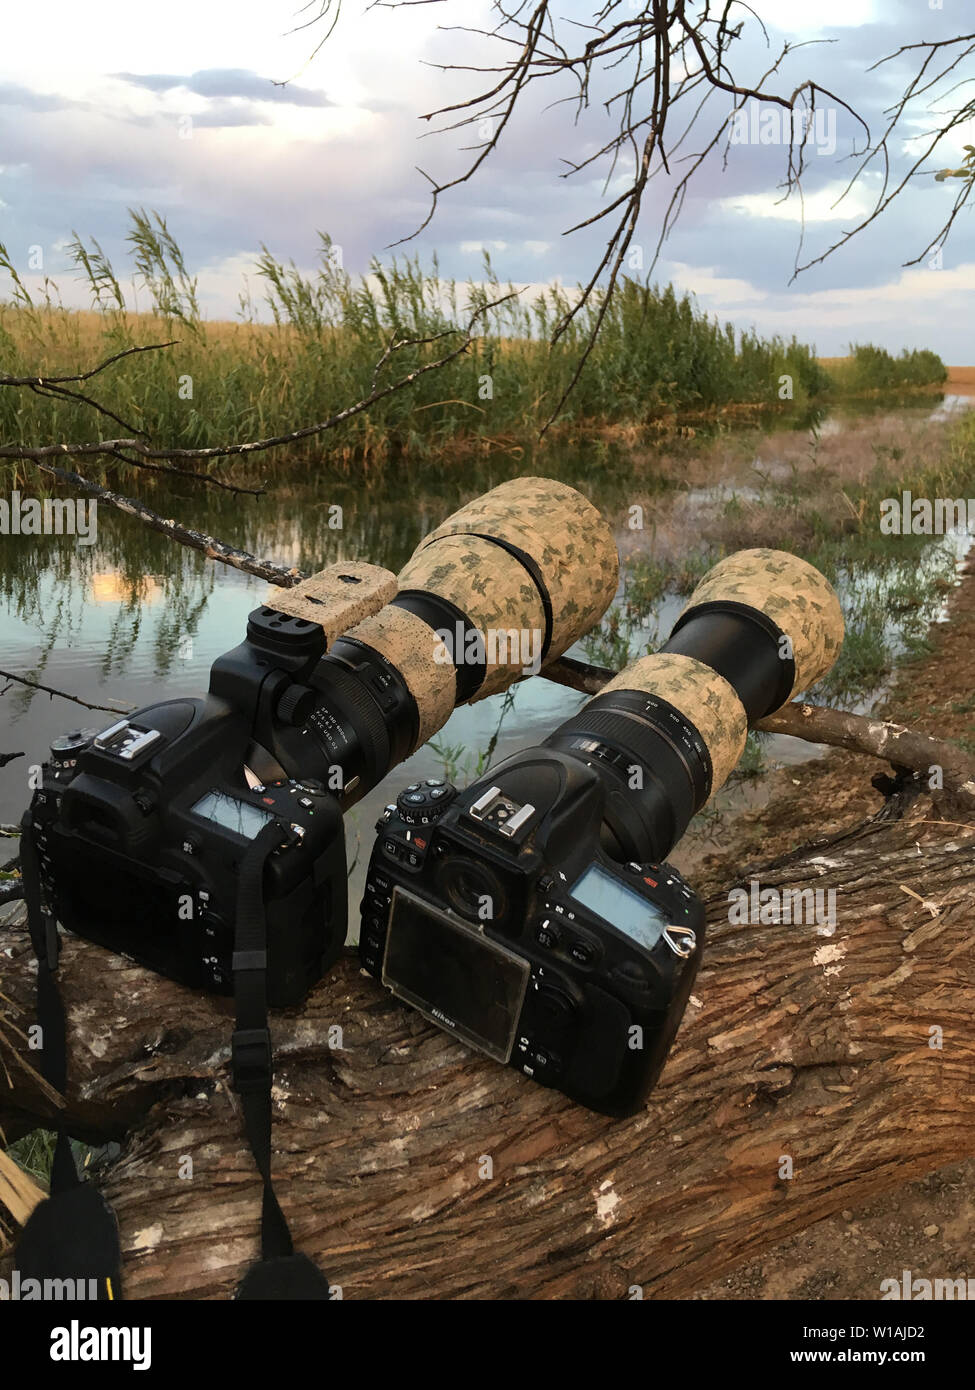 Macchina fotografica Nikon D800 e Nikon D750, obiettivo Tamron 150-600 g1 e g2 in Kalmykia Камера Никон Д750 и Д800 и объектив Тамрон 150-600 на съёмке дикой природы Foto Stock